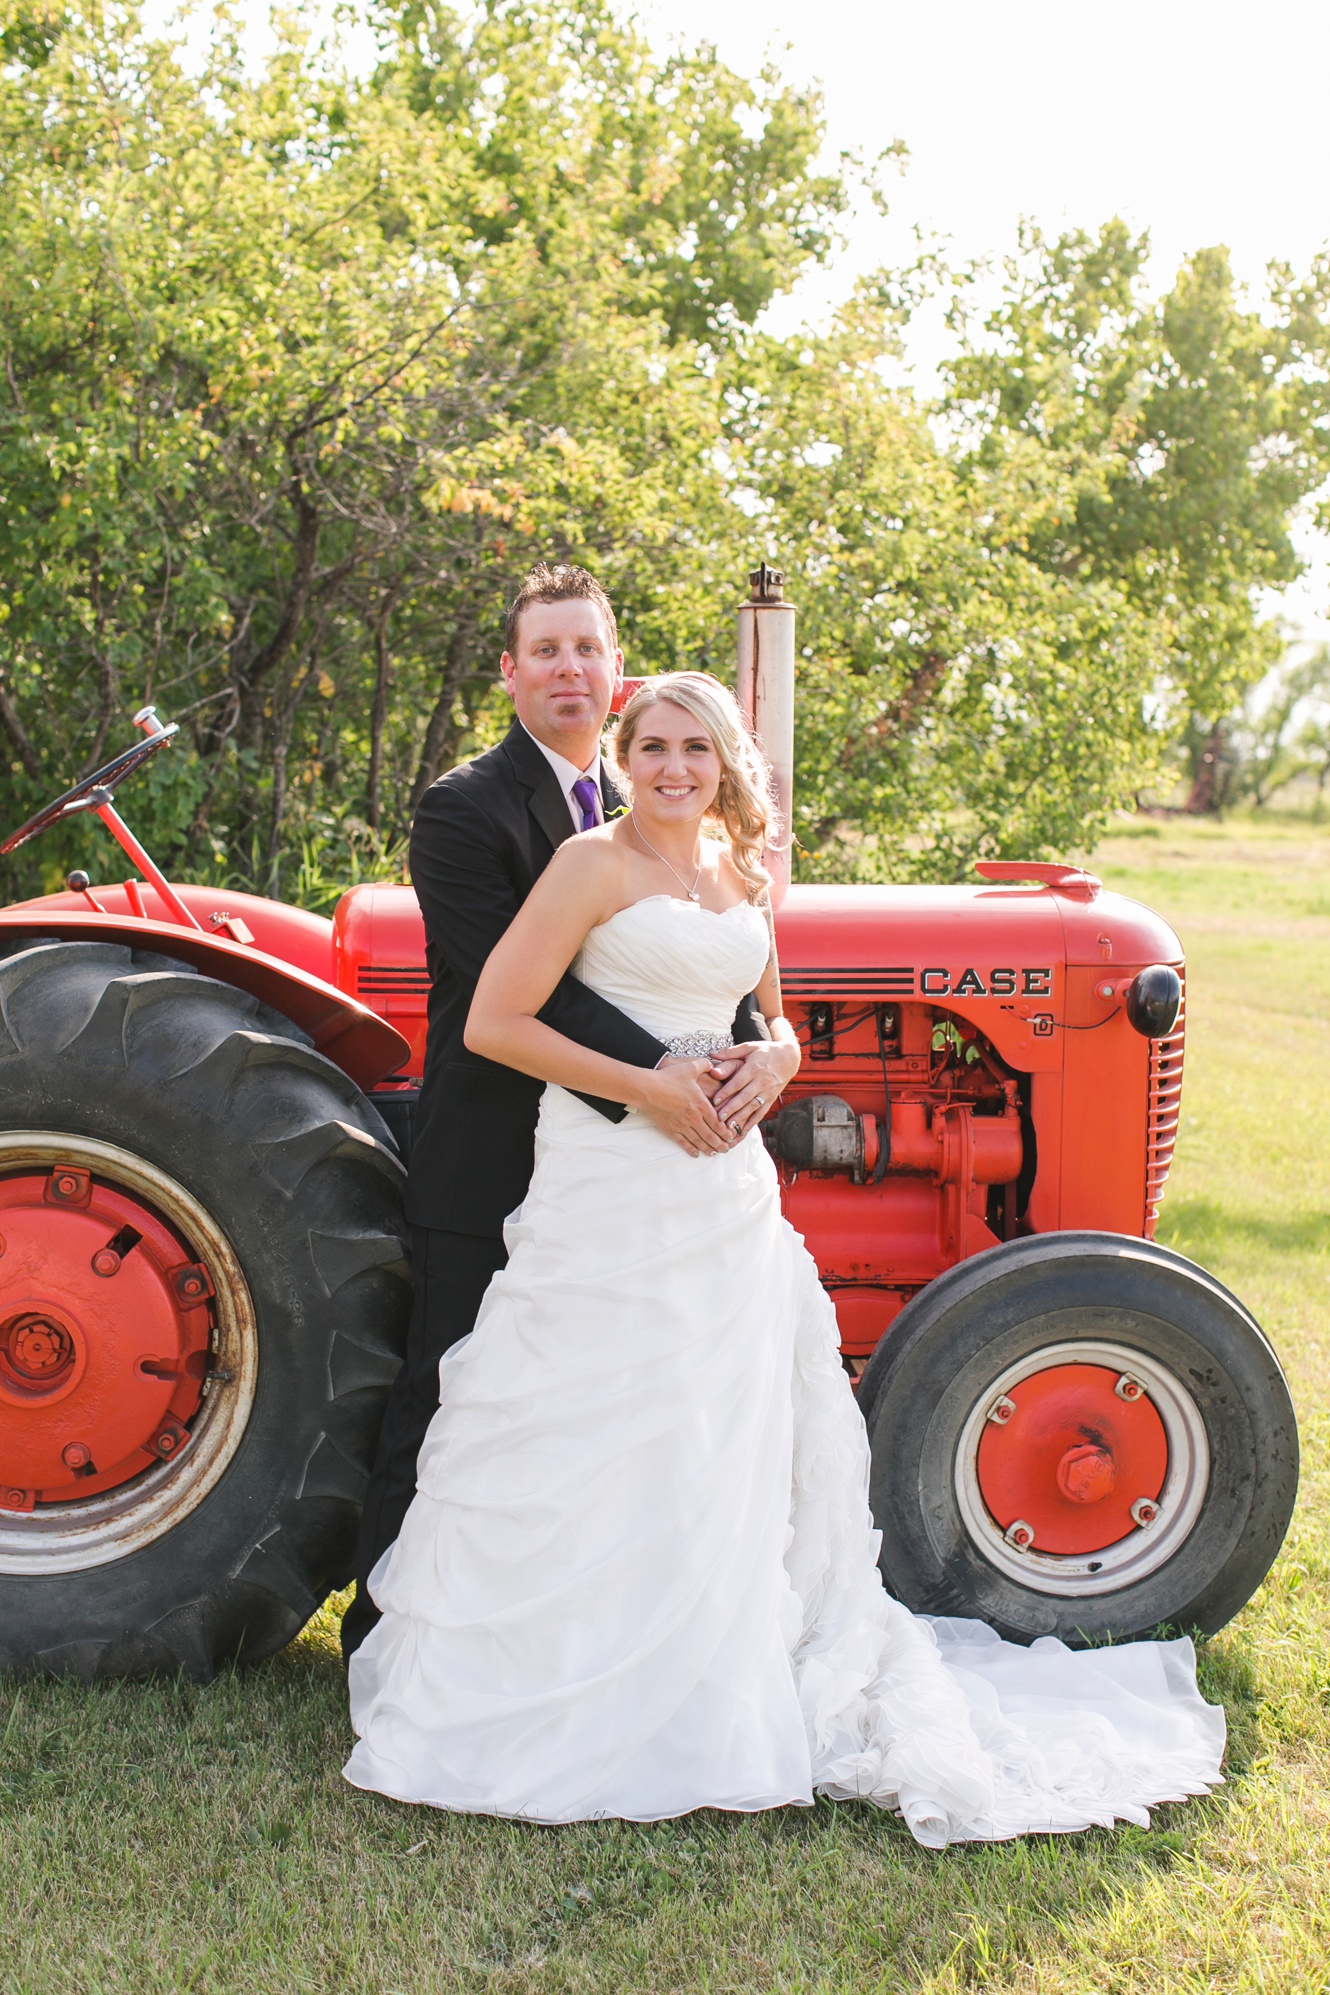 wedding photo with farm tractor photo